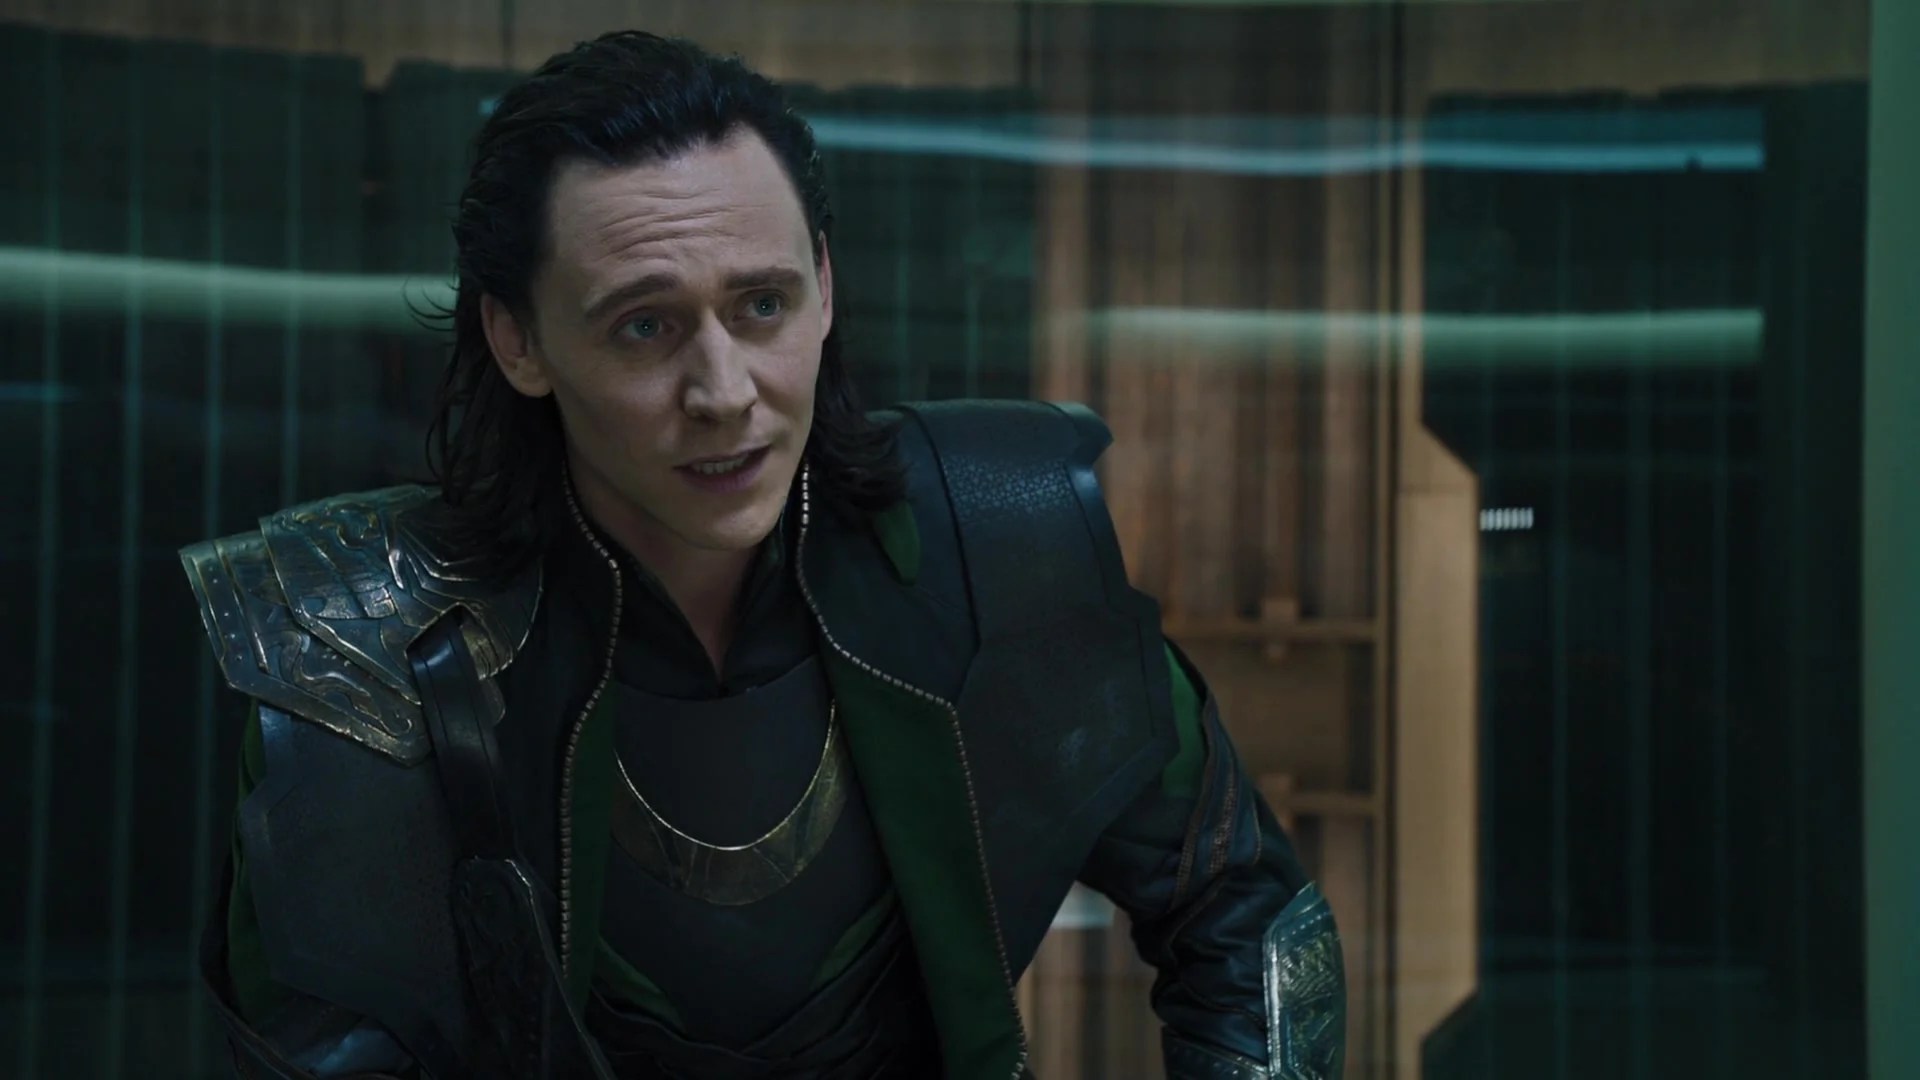 Loki (Tom Hiddleston) taunts Black Widow (Scarlett Johansson) while sitting in captivity aboard the Helicarrier in The Avengers (2012), Marvel Entertainment